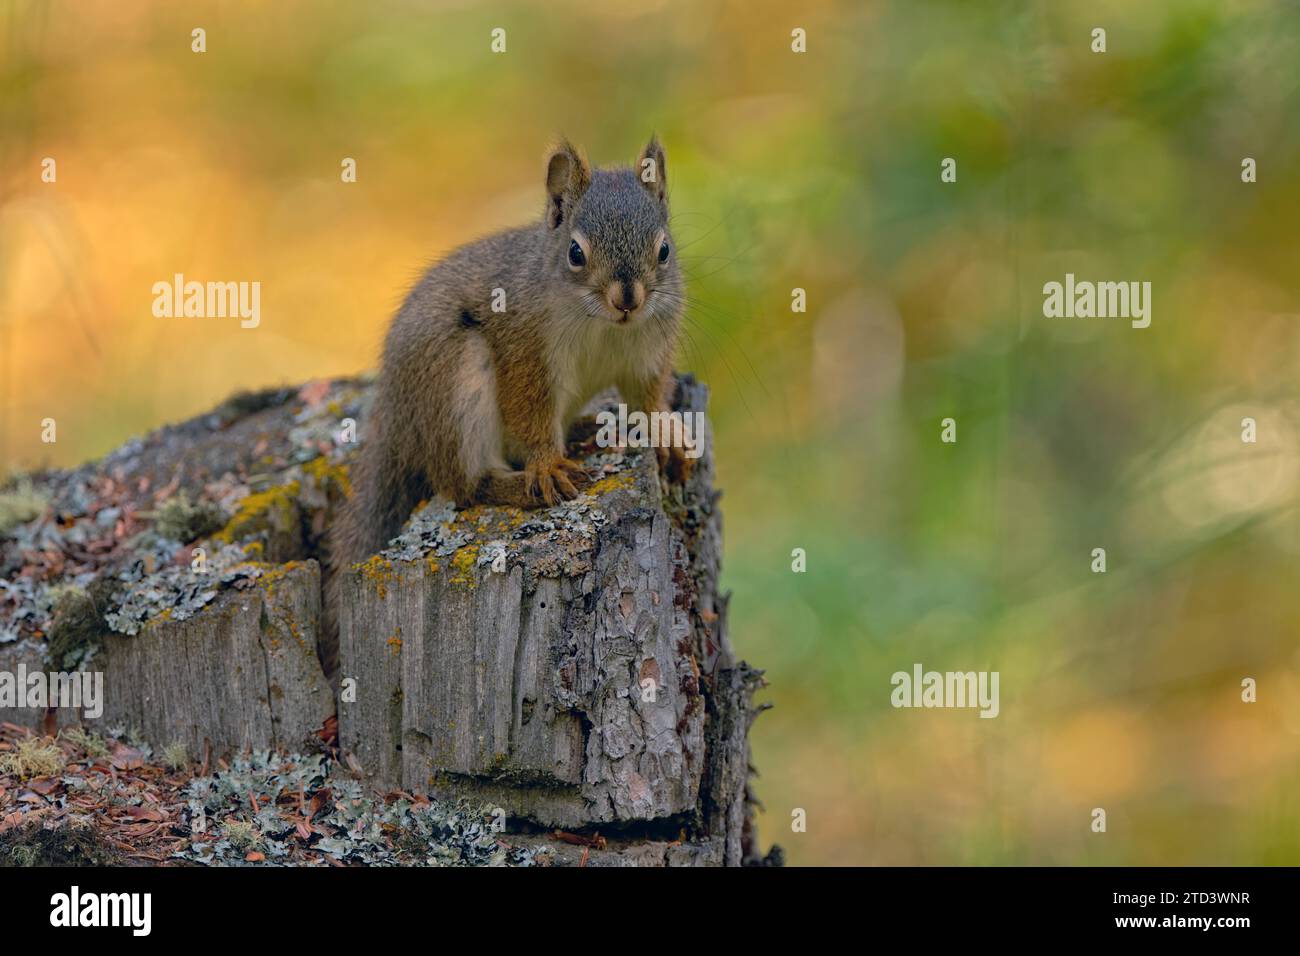 Common Canadian red squirrel (Tamiasciurus hudsonicus) sitting on tree stump, Yukon Territory, Canada Stock Photo